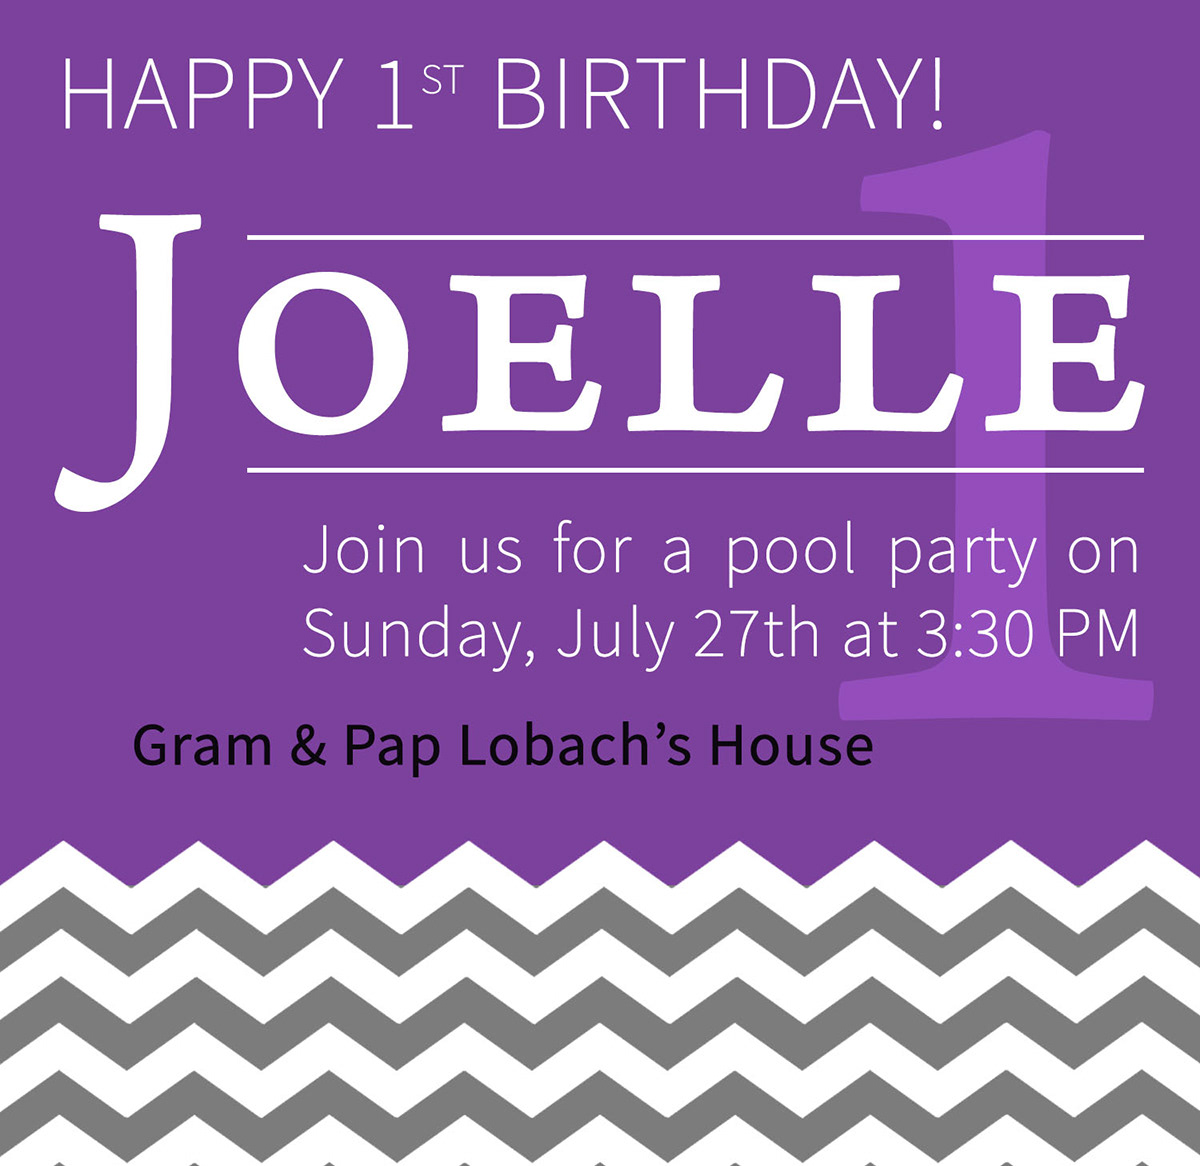 Birthday joelle